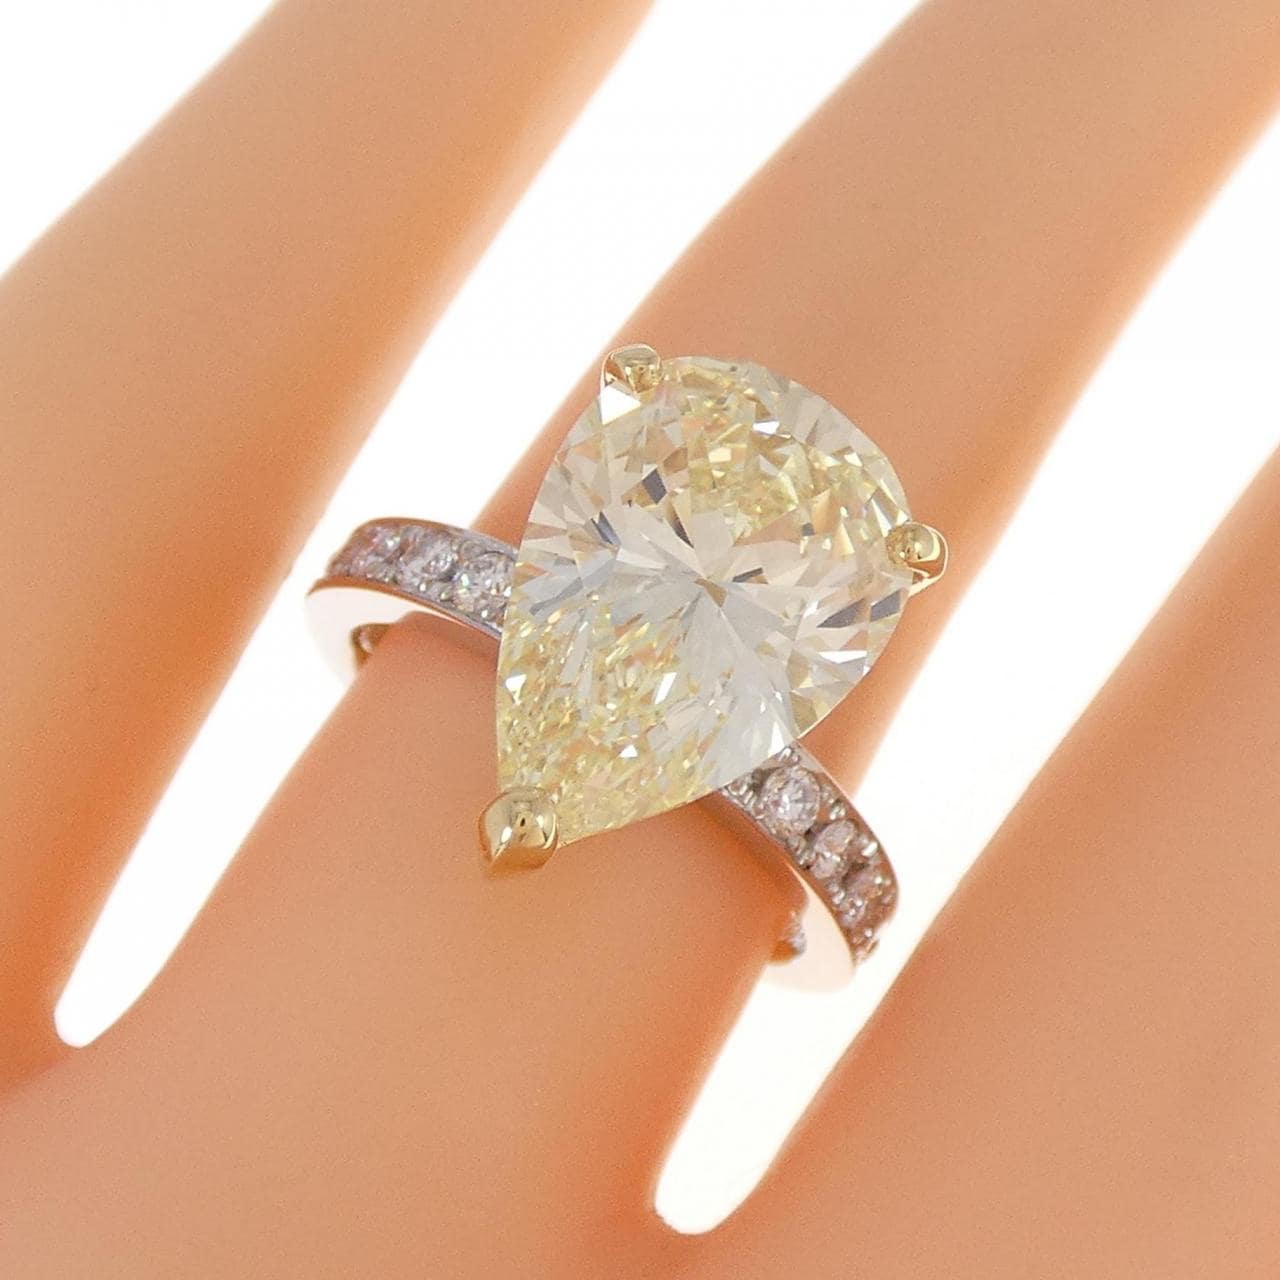 [Remake] PT/K18YG Diamond Ring 5.406CT LY VS2 Pear Shape